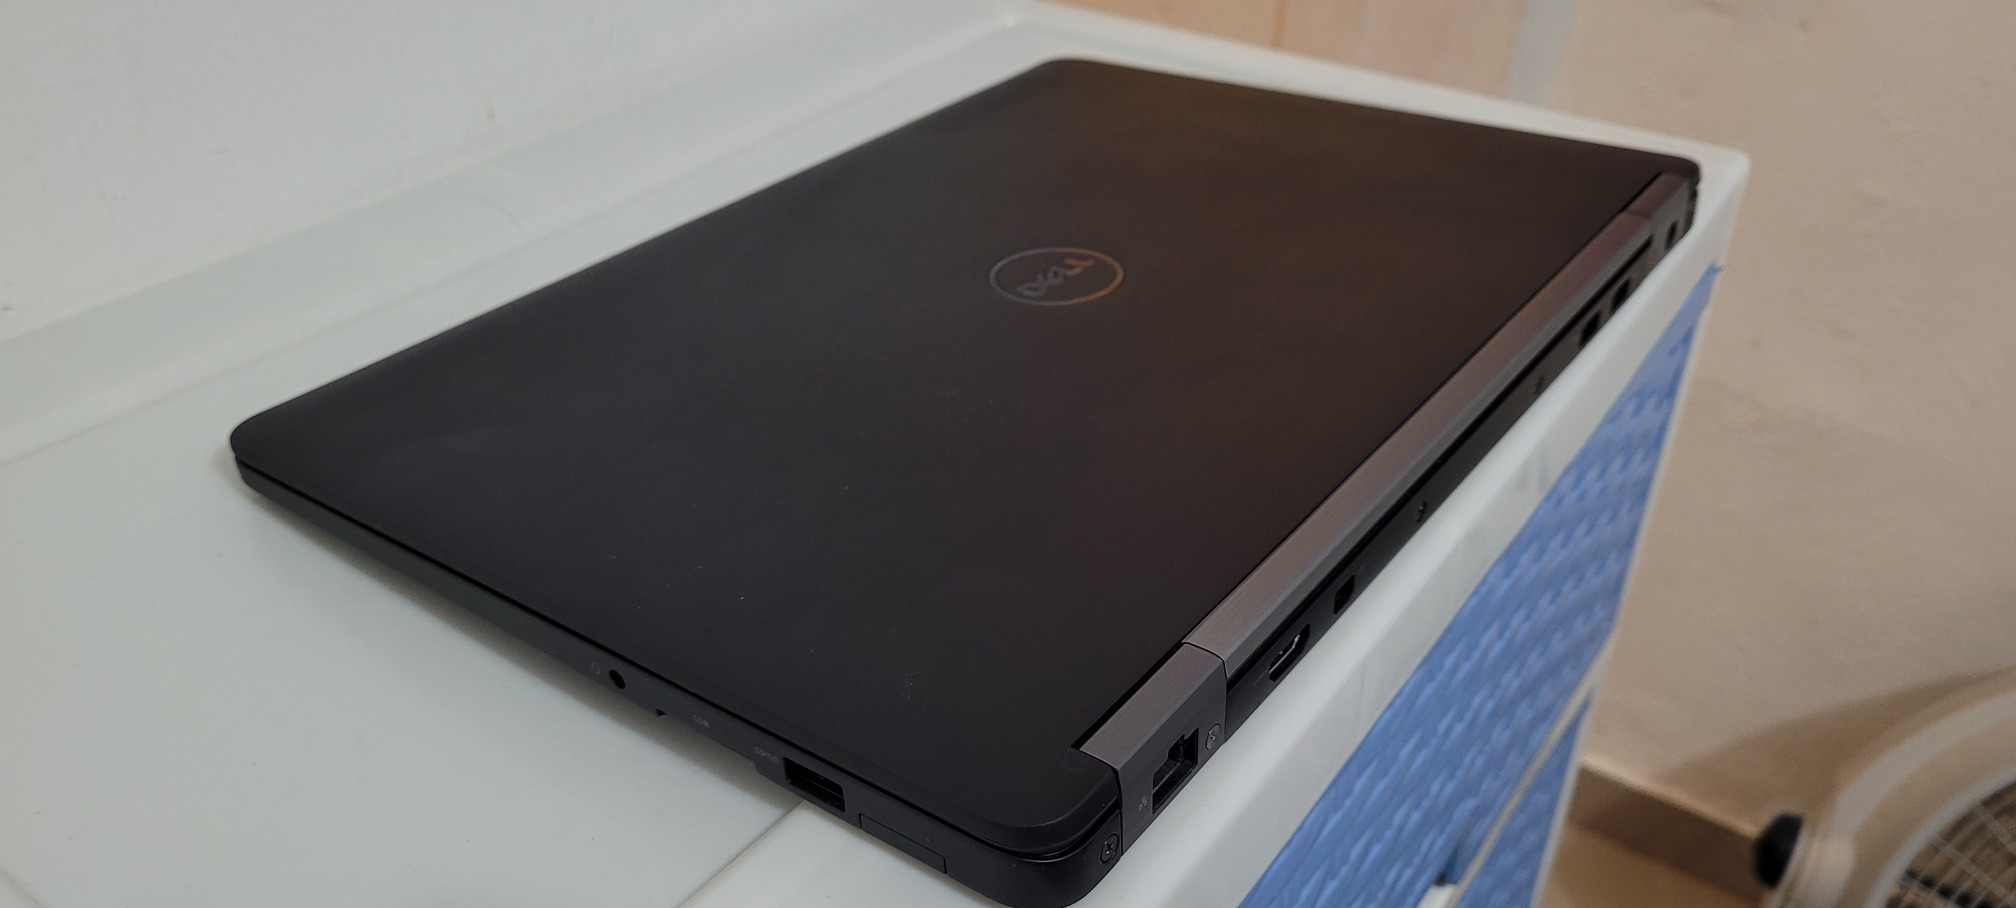 computadoras y laptops - Dell 7480 14 Pulg Core i5 7ma Gen Ram 8gb ddr4 Disco 128gb SSD 1080p 2